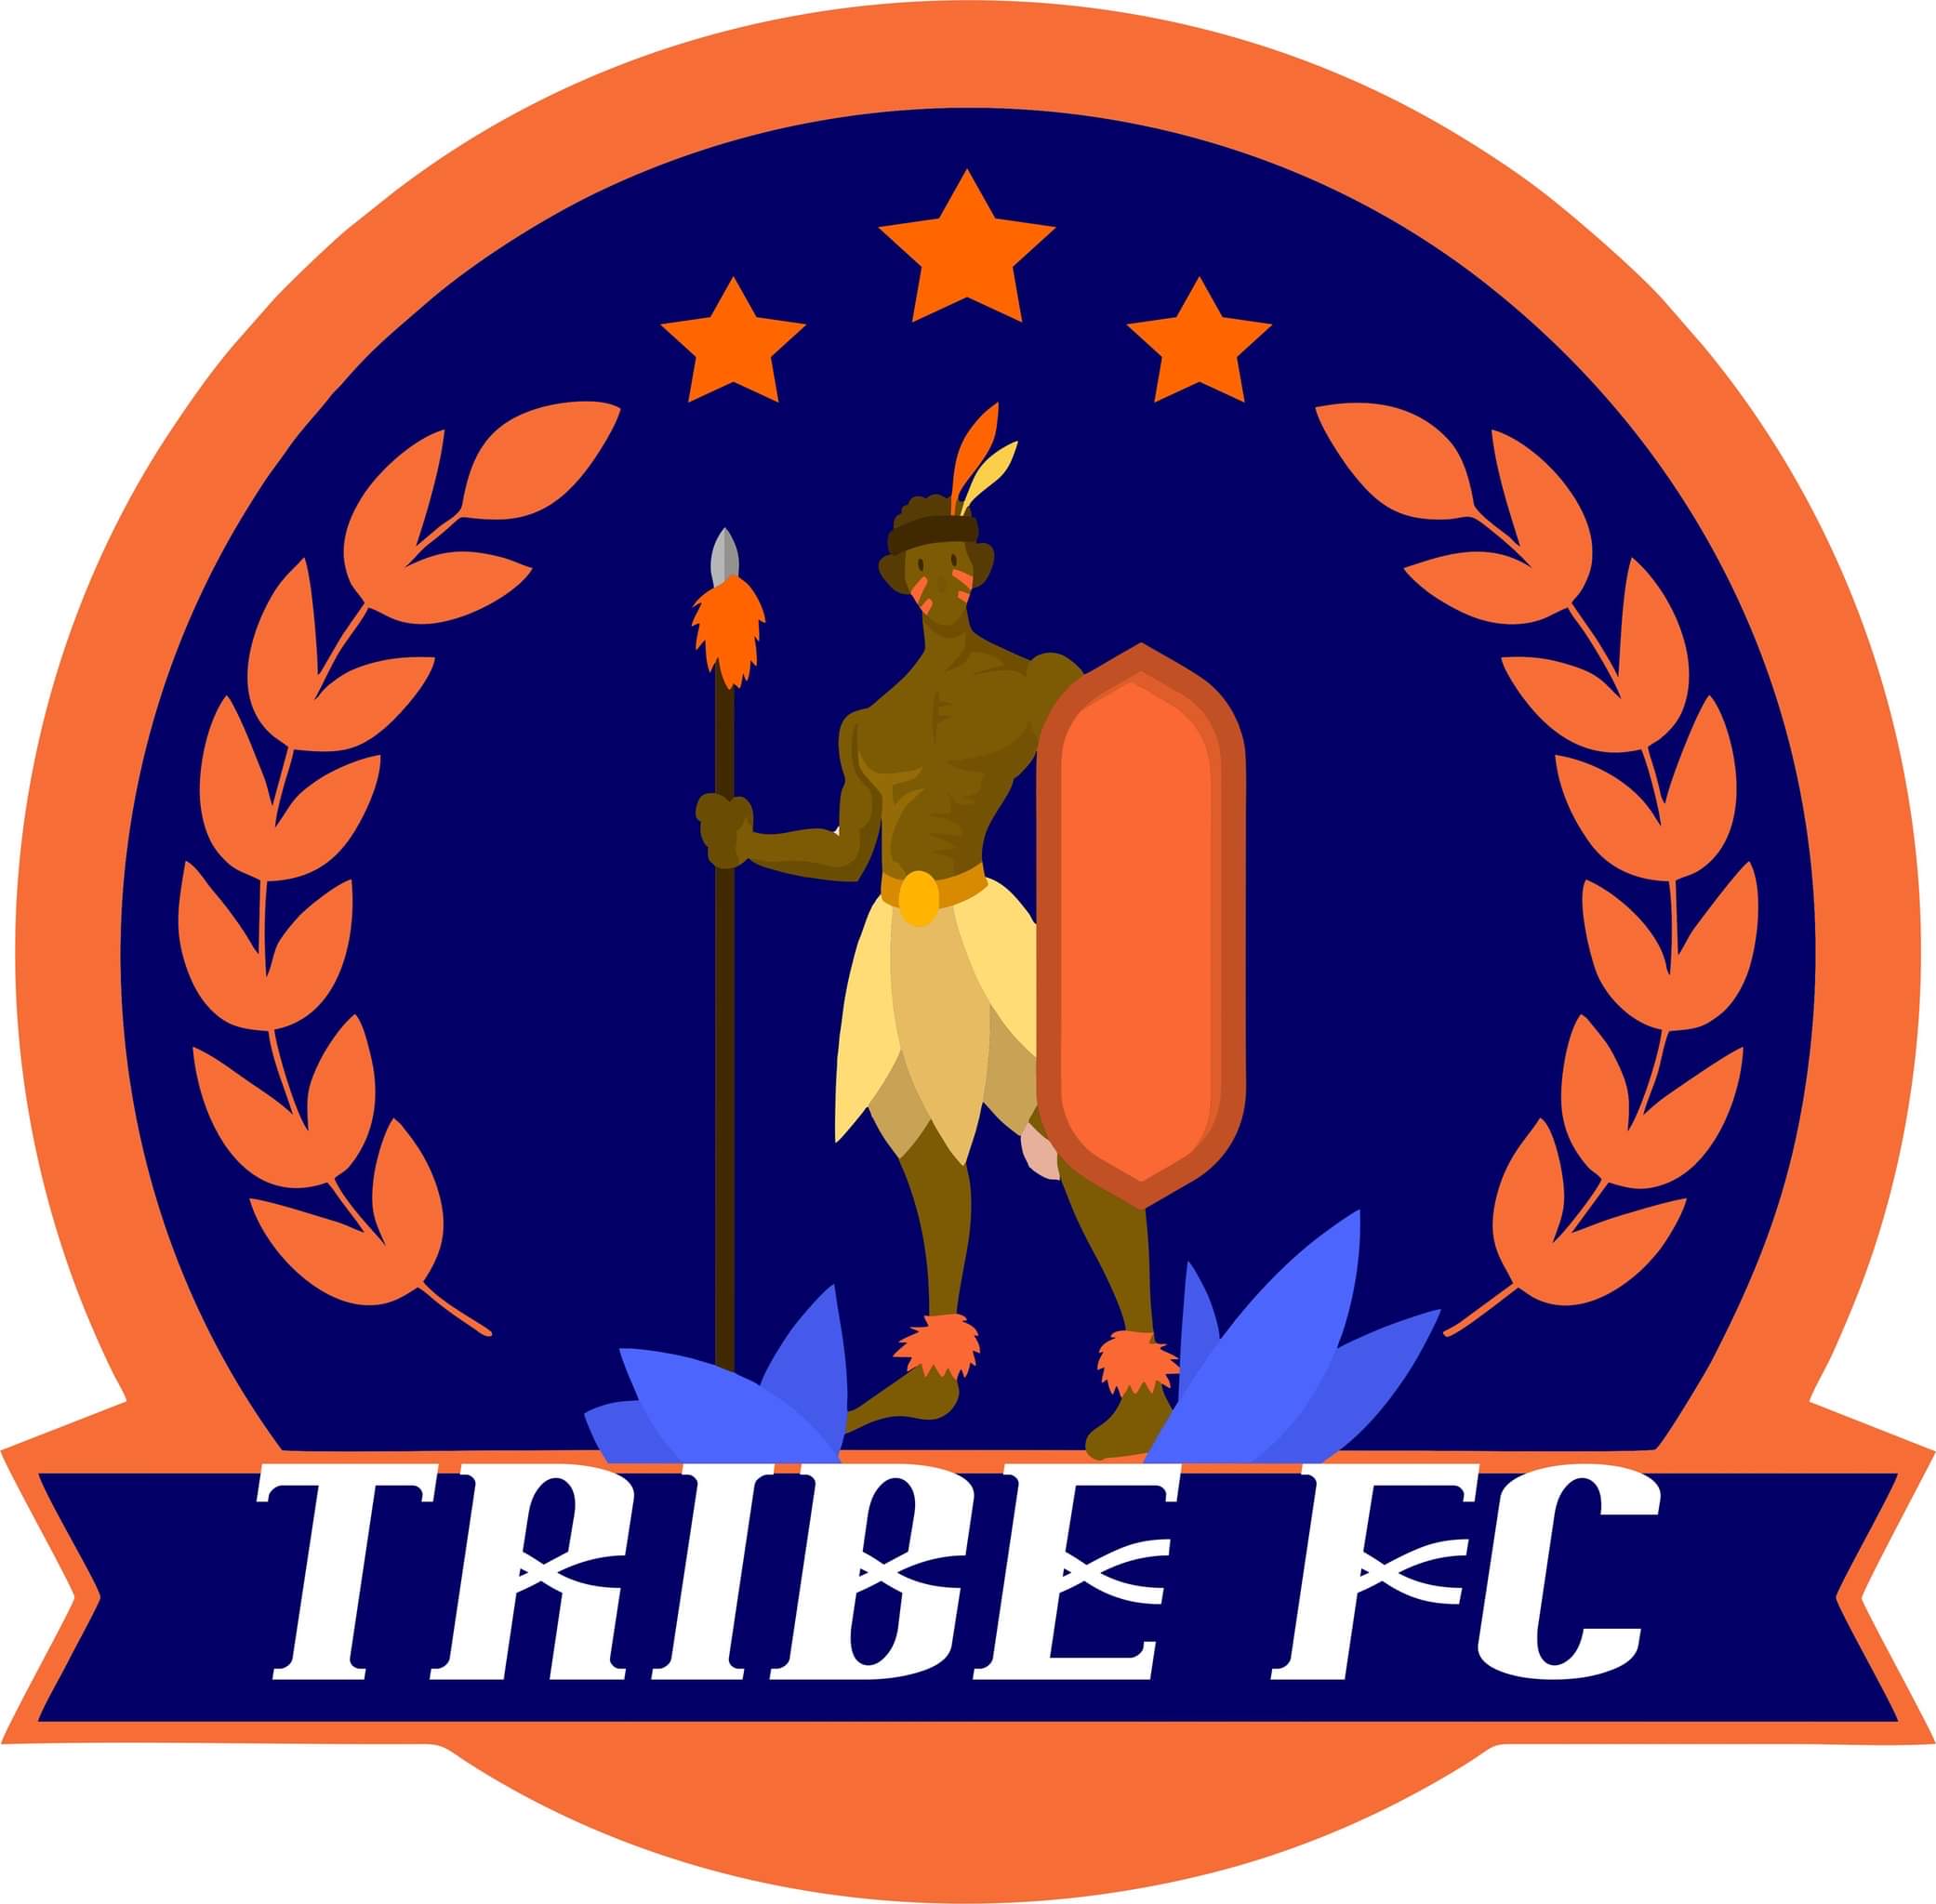 Fc tribe